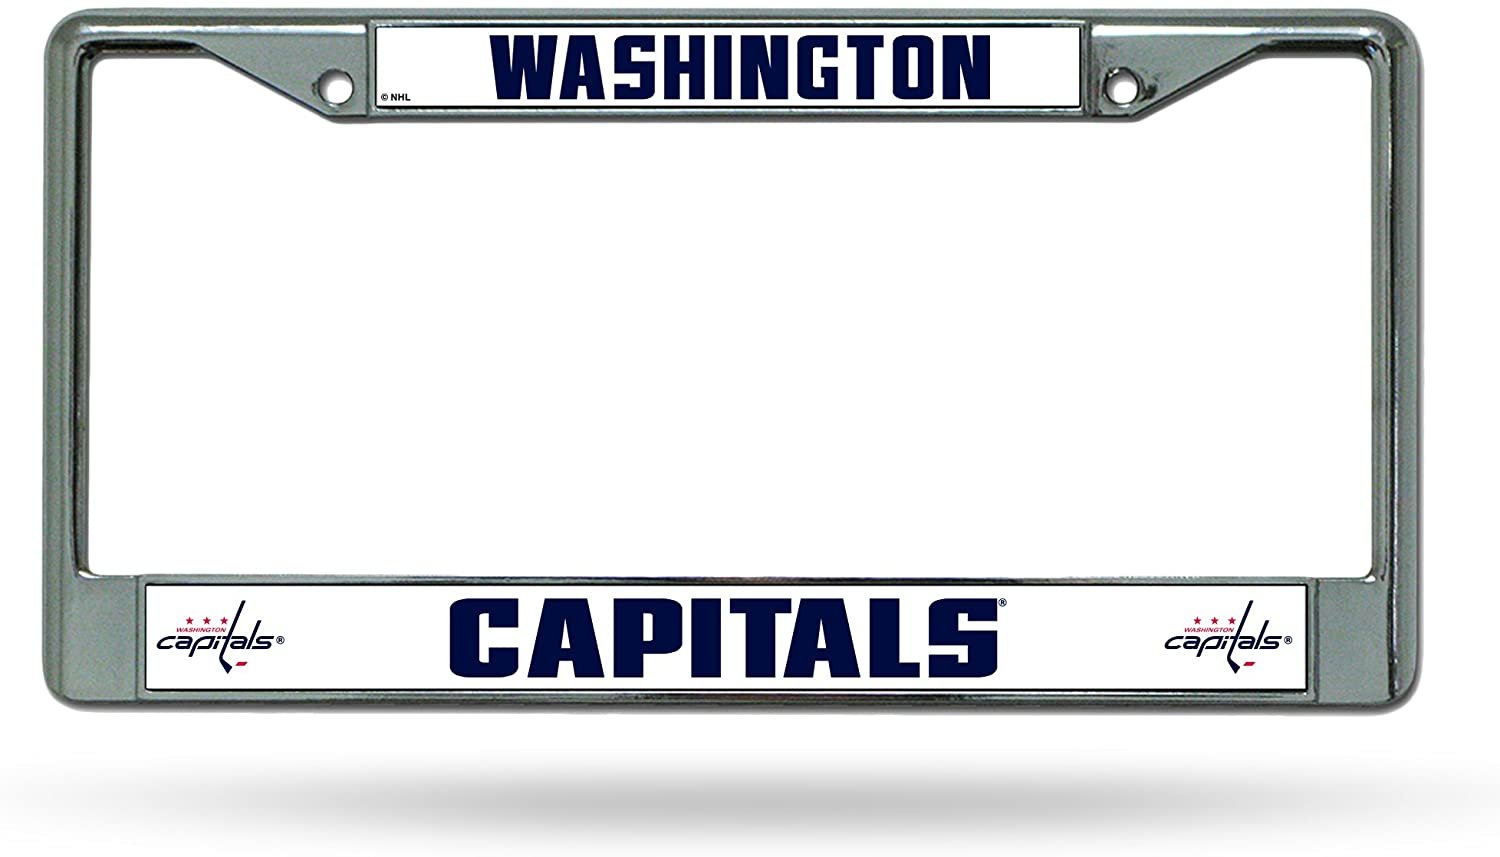 Washington Capitals Premium Metal License Plate Frame Chrome Tag Cover, 12x6 Inch